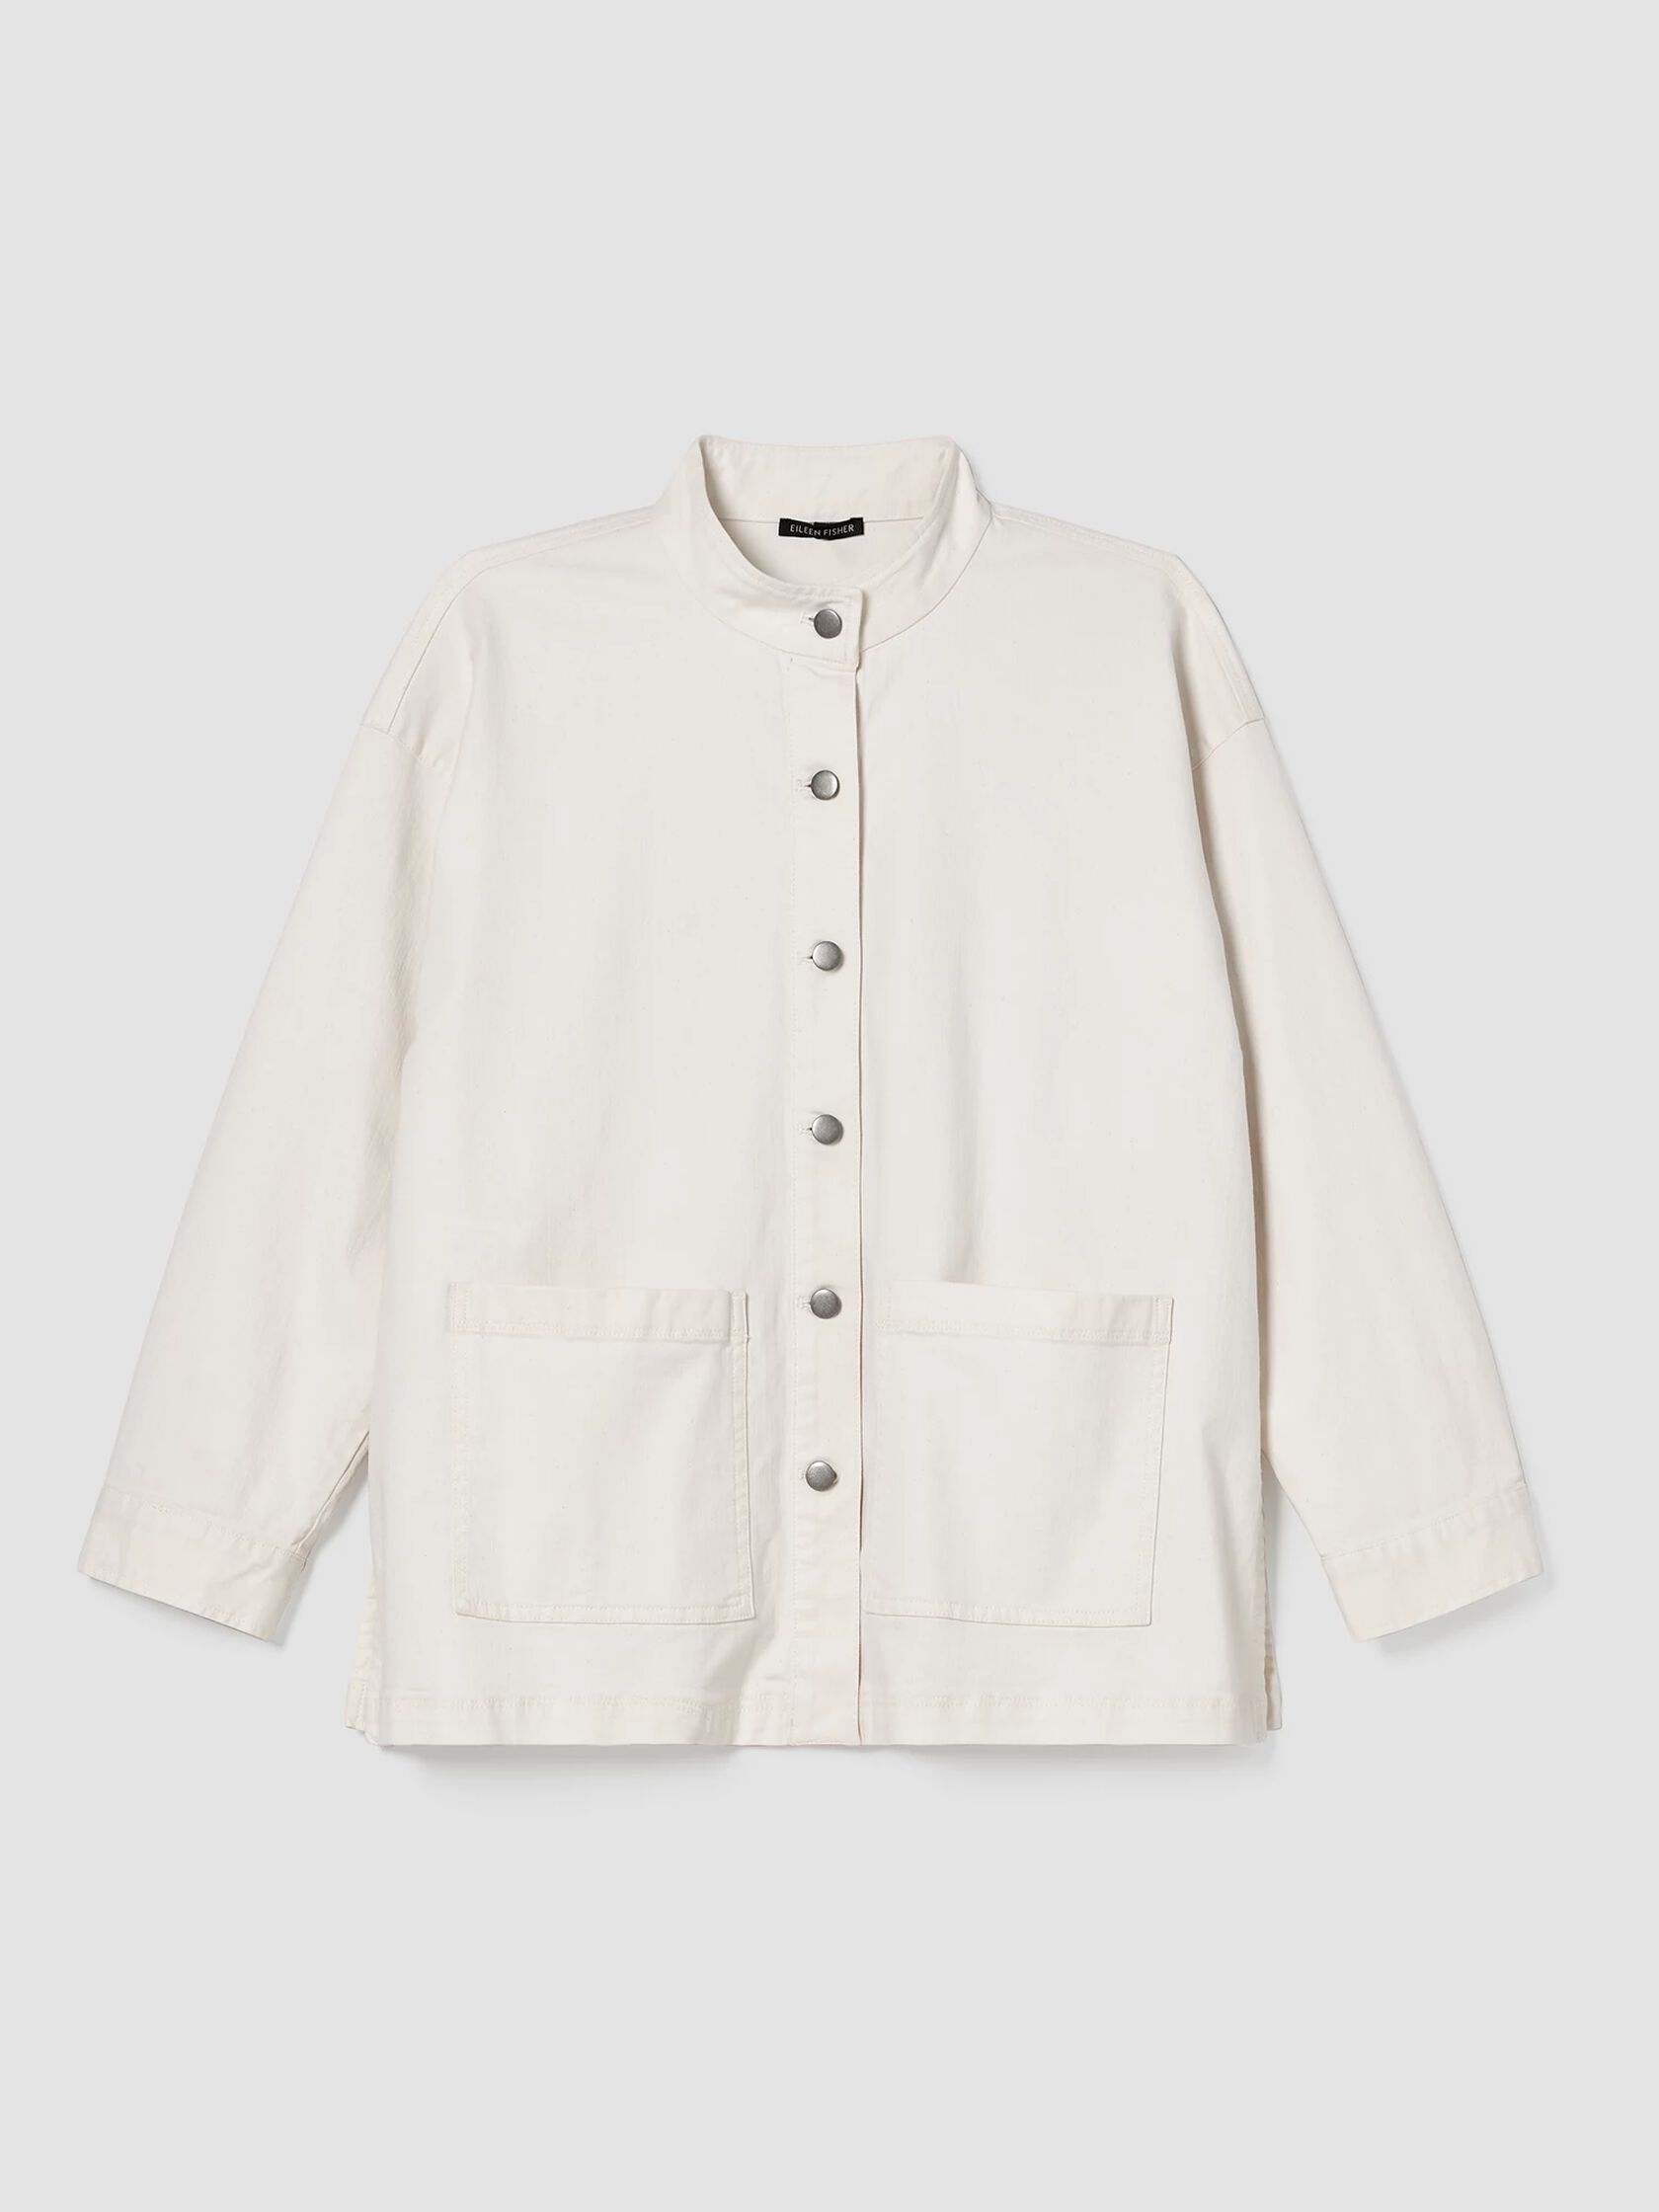 Undyed Organic Cotton Denim Jacket